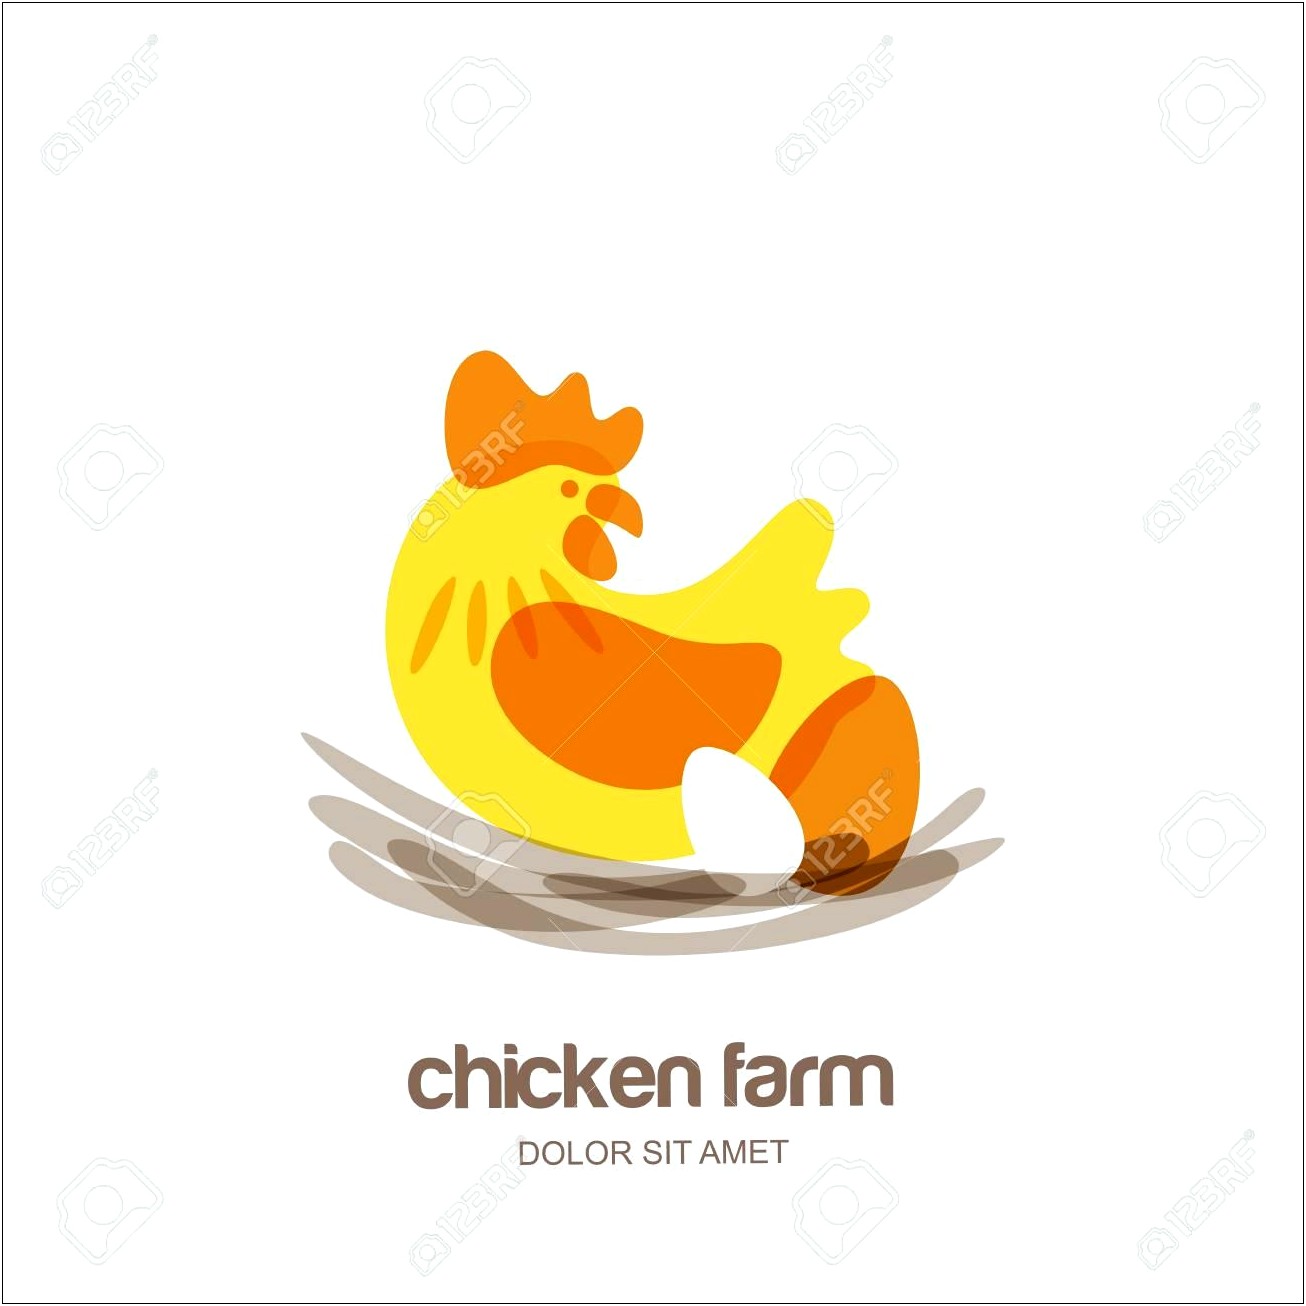 Free Label Template Egg Carton Chicken